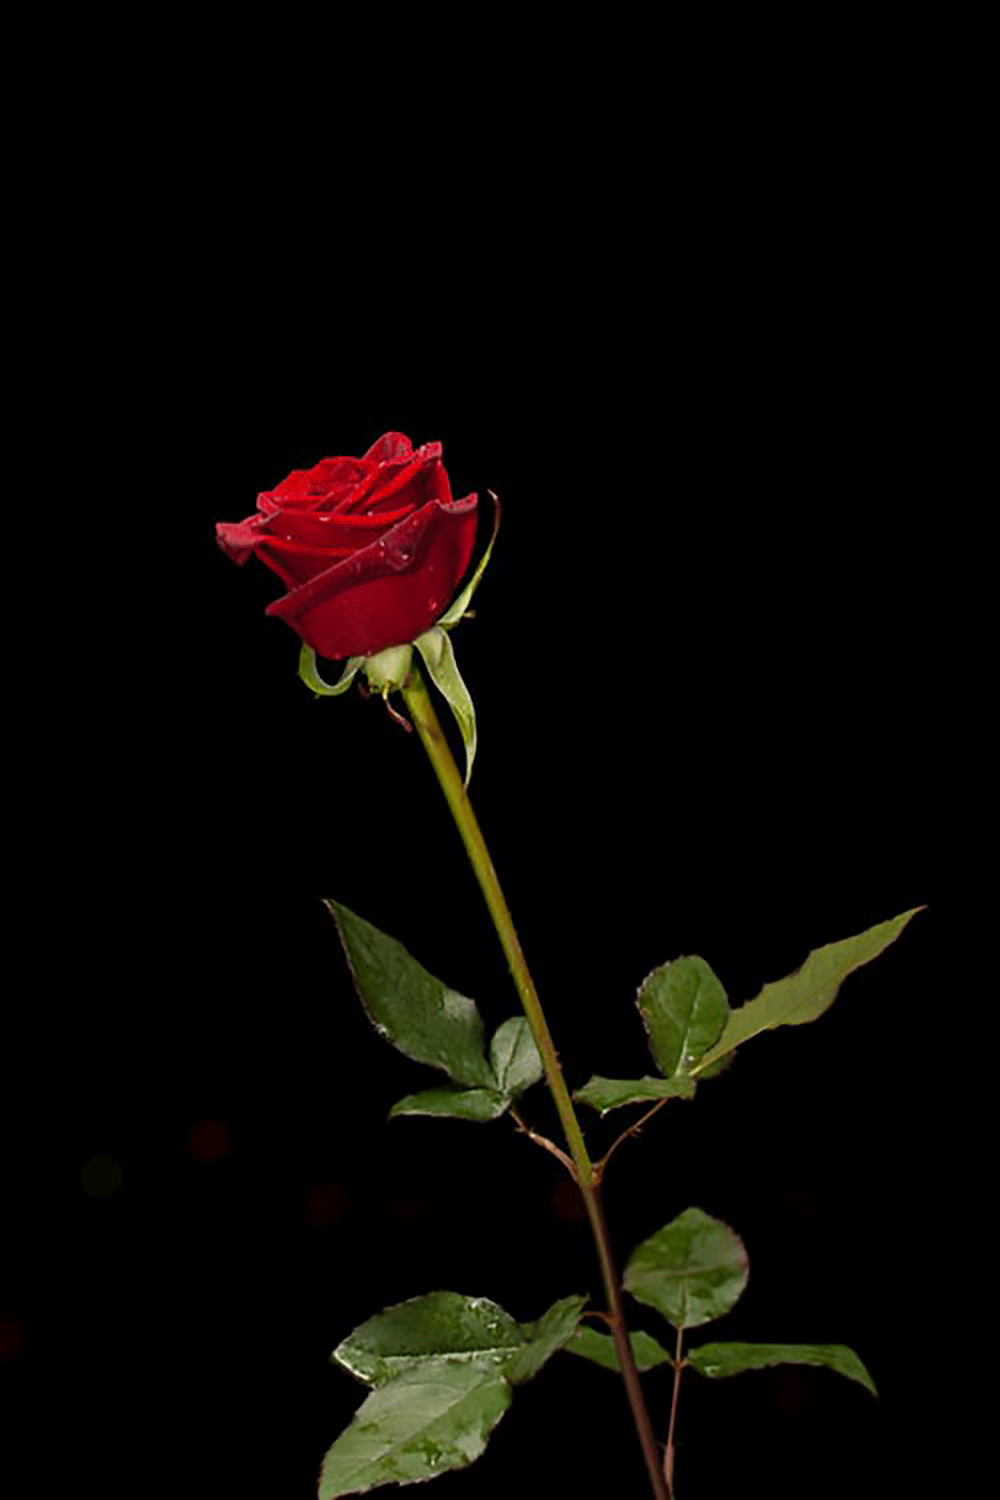 Beautiful red rose image